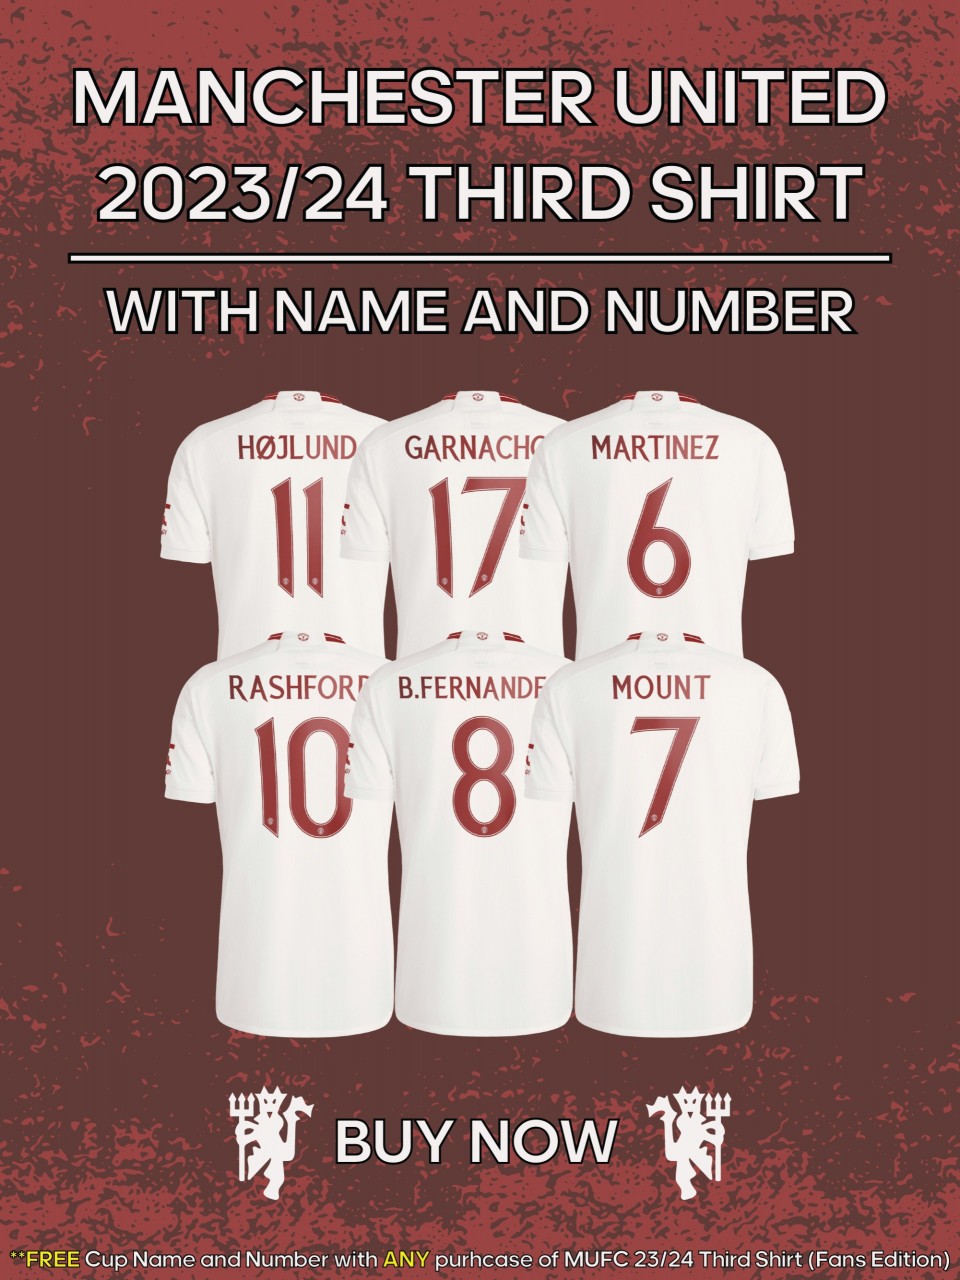 Torino FC 23-24 Away Kit Released - Footy Headlines